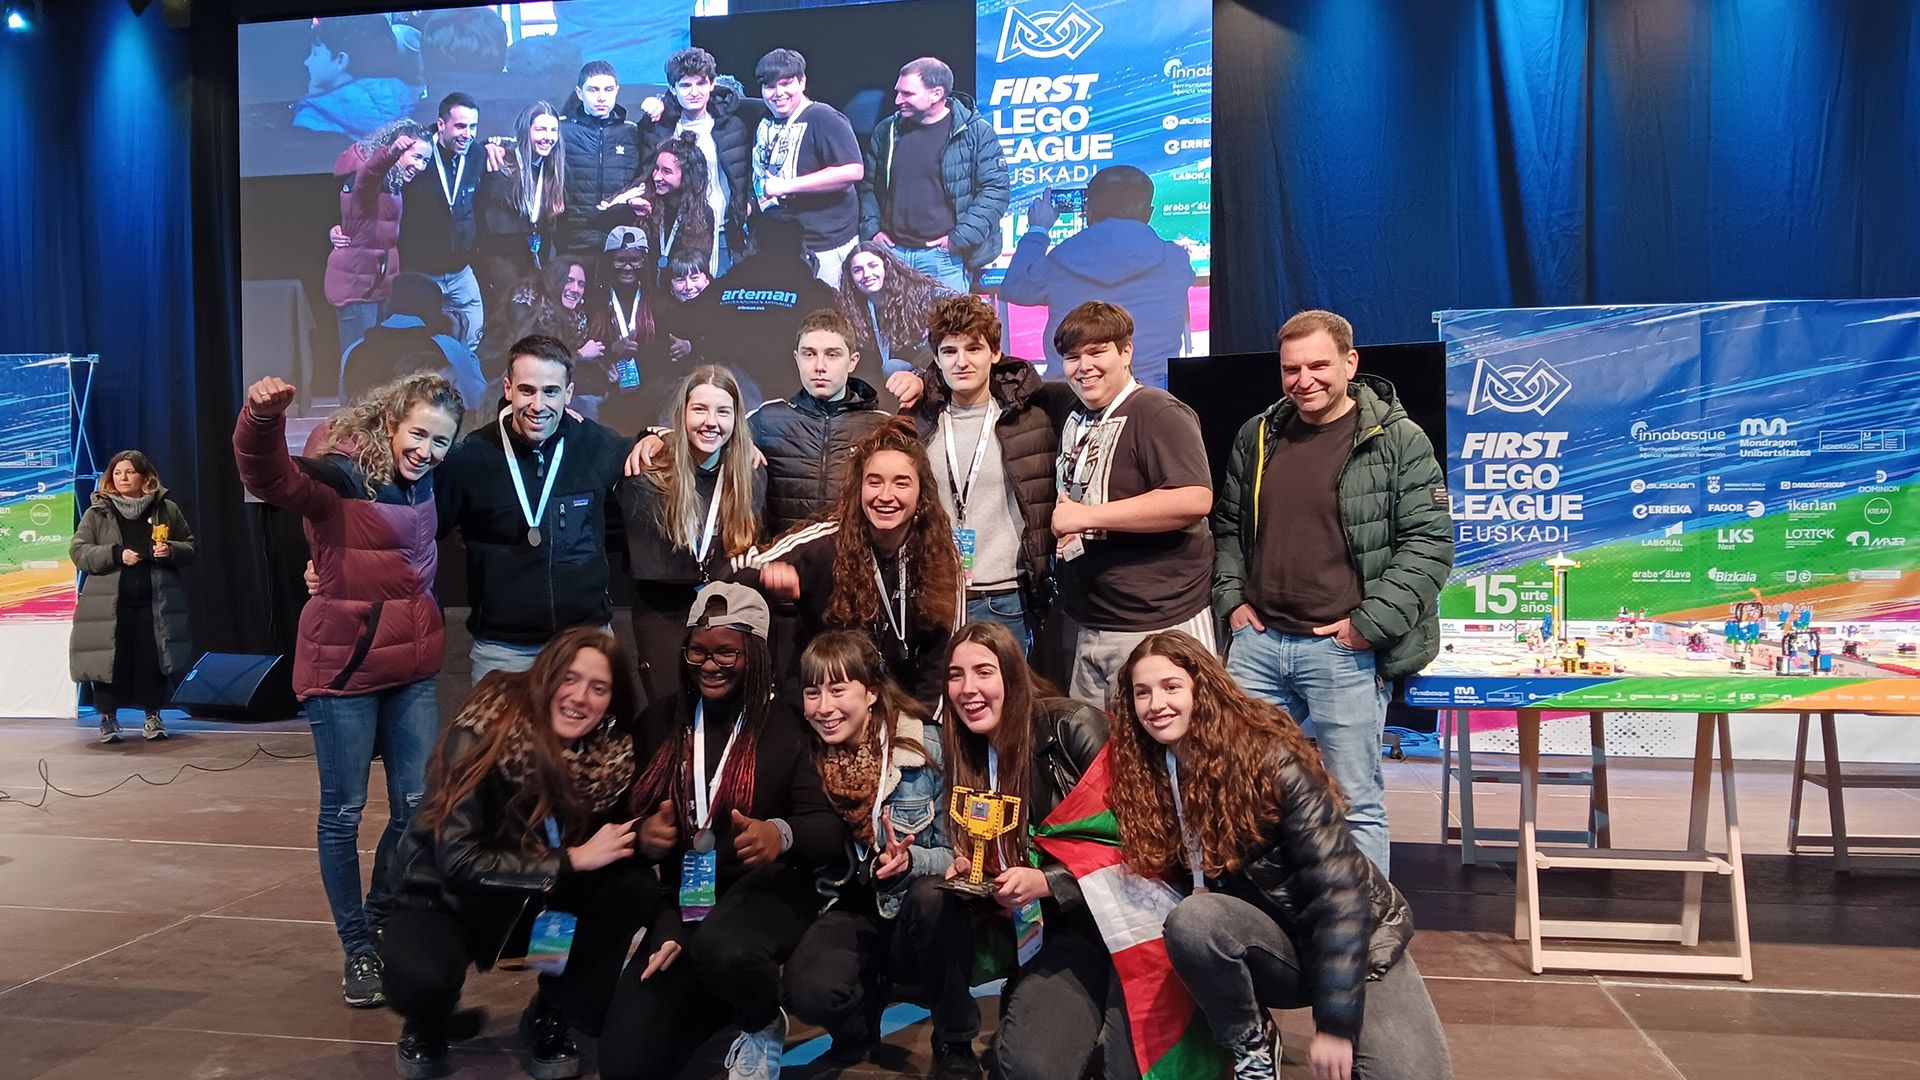 Danobatgroup awards the innovative work of young students in First Lego League Euskadi-MONDRAGON